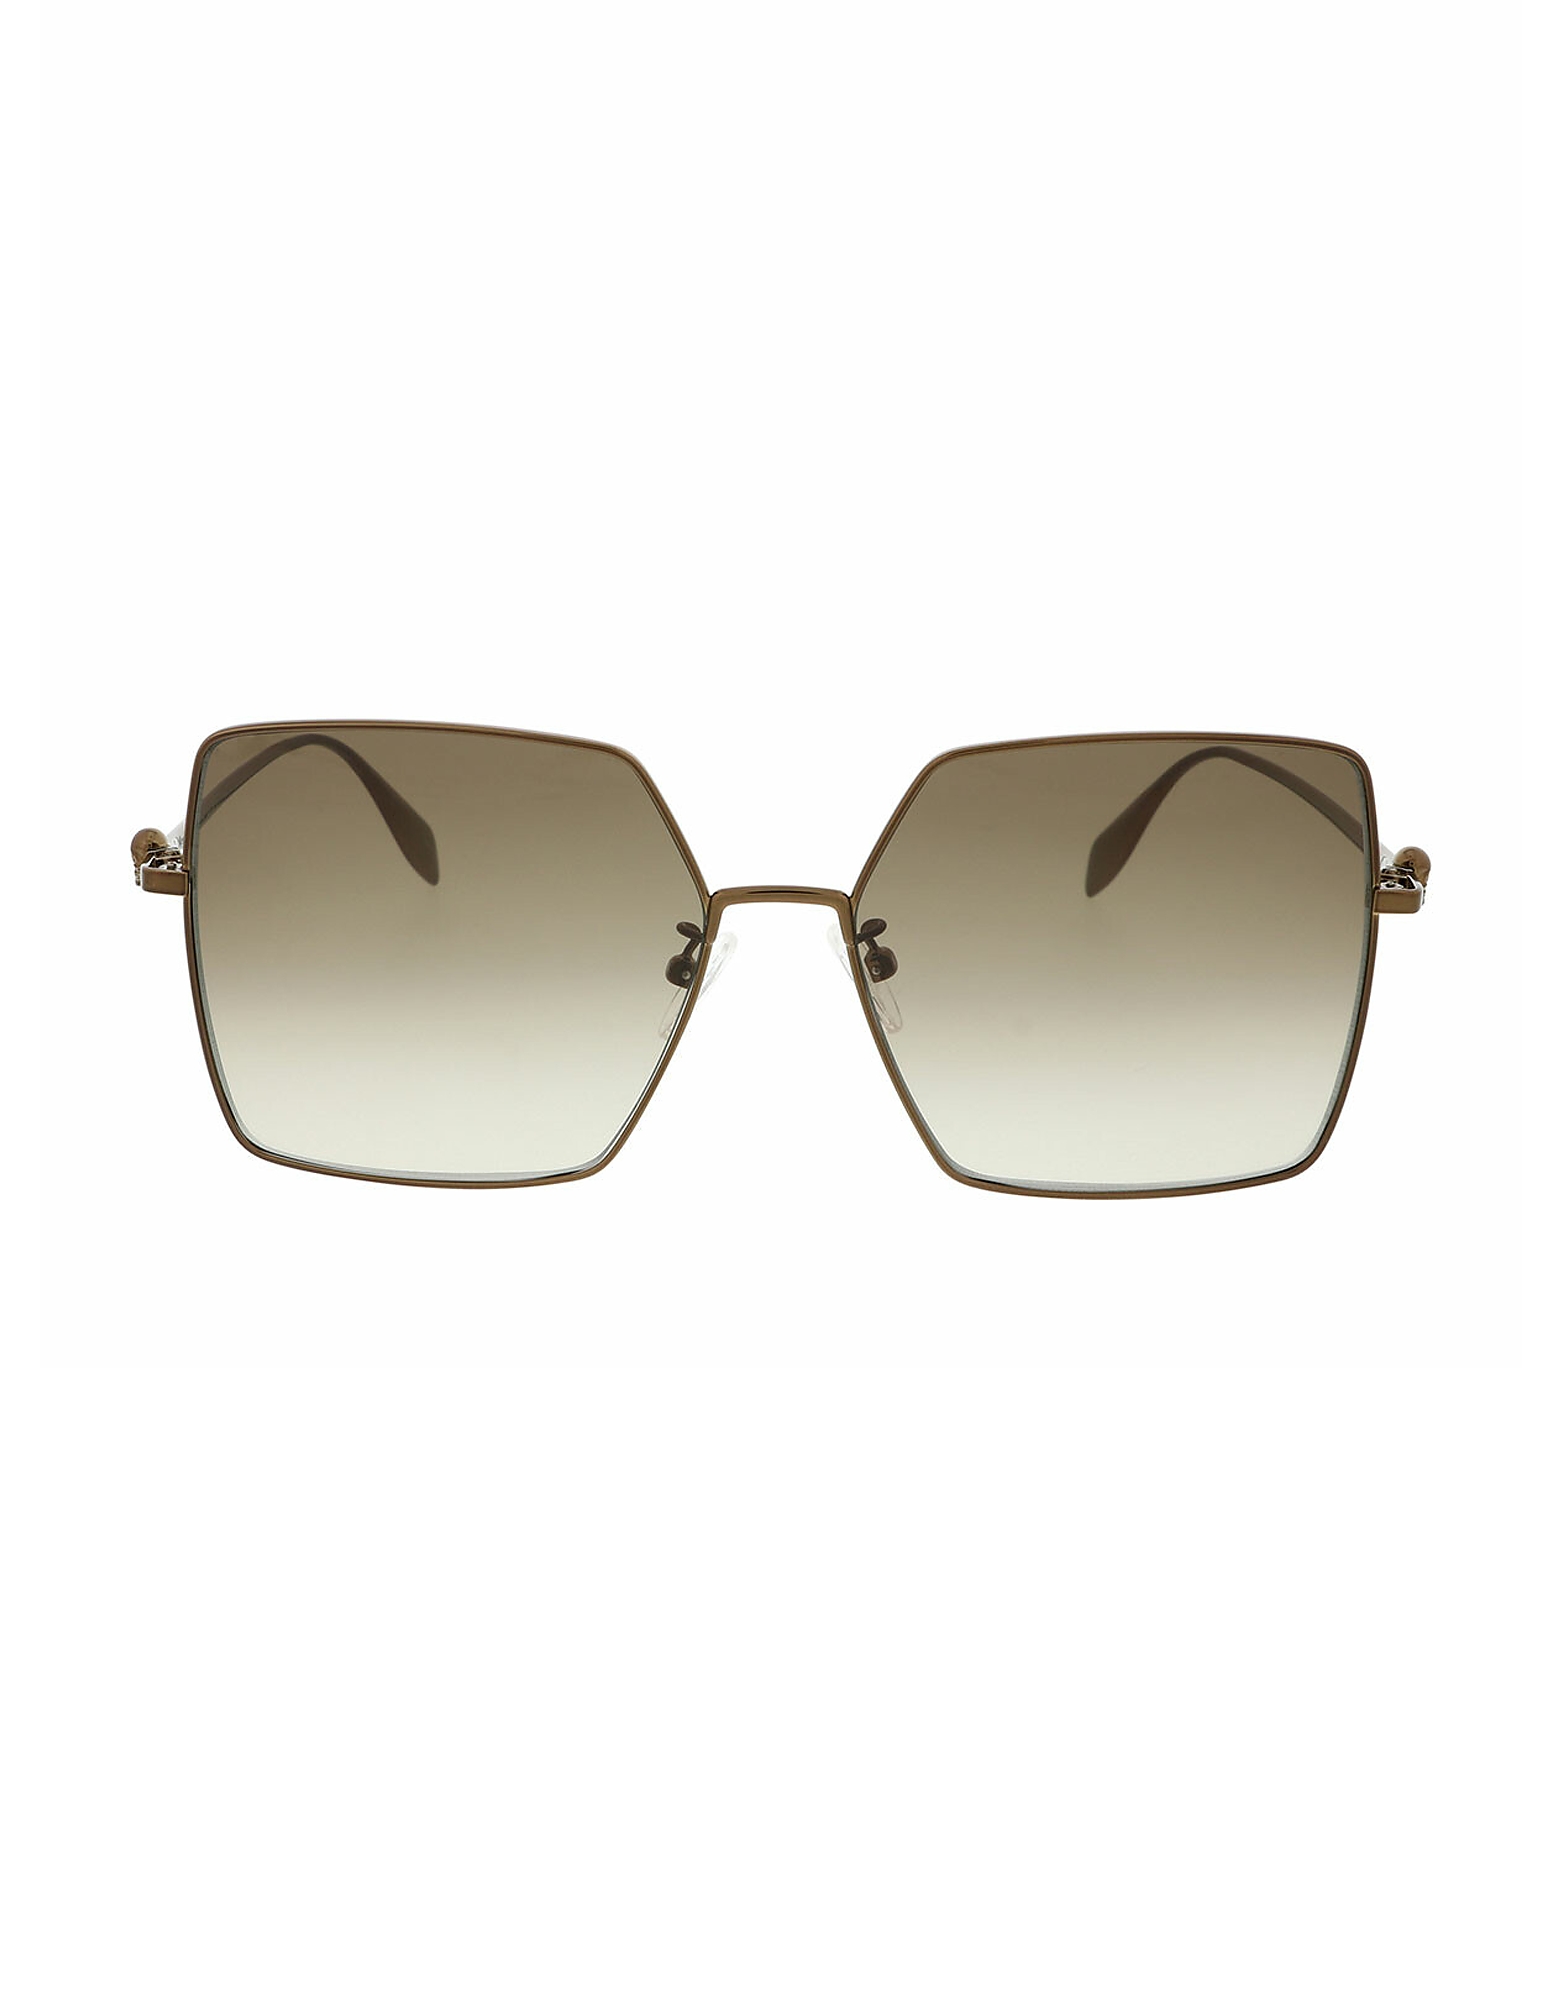 Alexander McQueen Sunglasses AM0273S Brown Metal Frame Square Women's Sunglasses